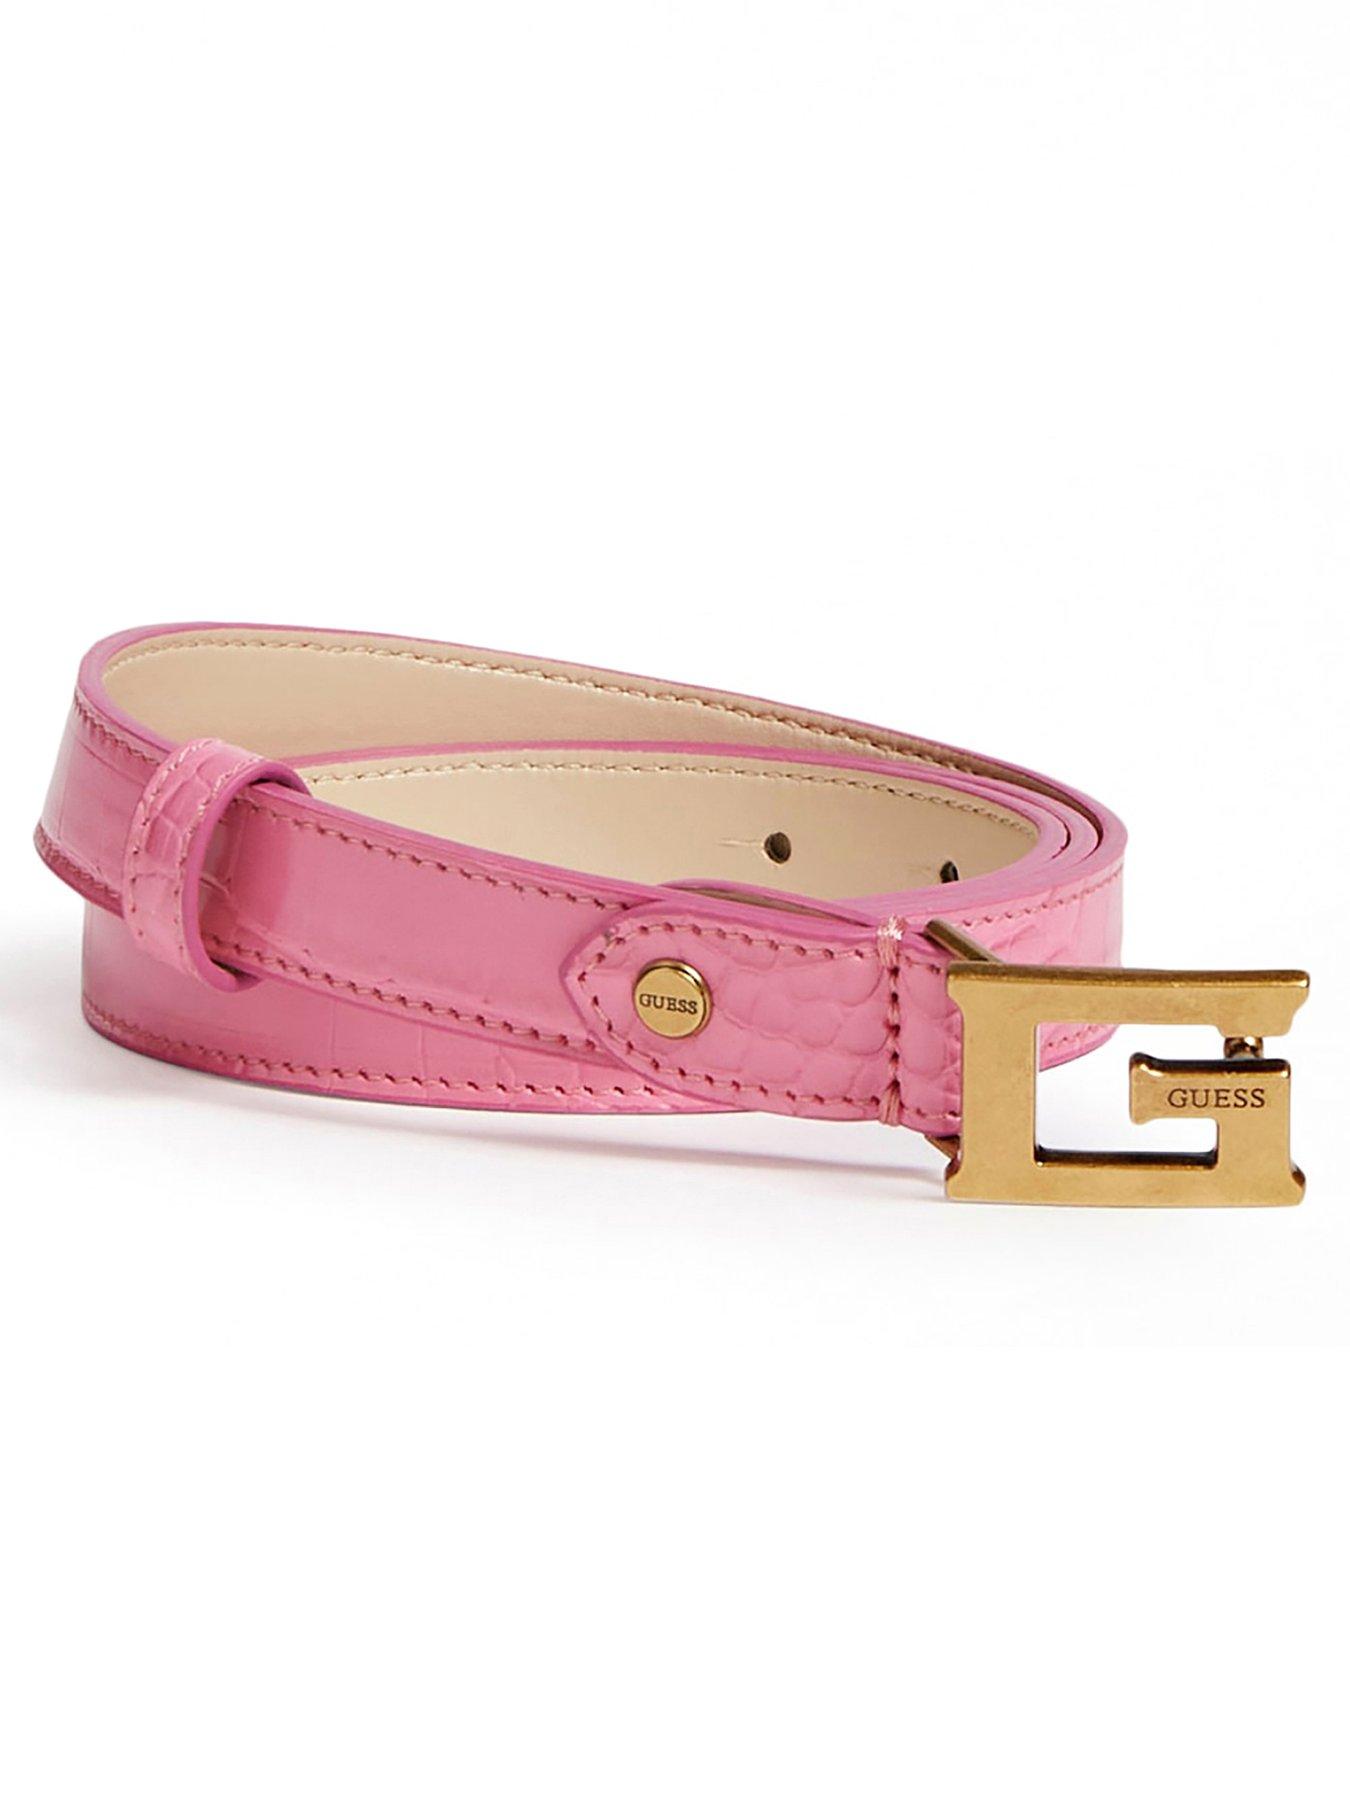 discount 67% NoName belt Pink Single WOMEN FASHION Accessories Belt Pink 